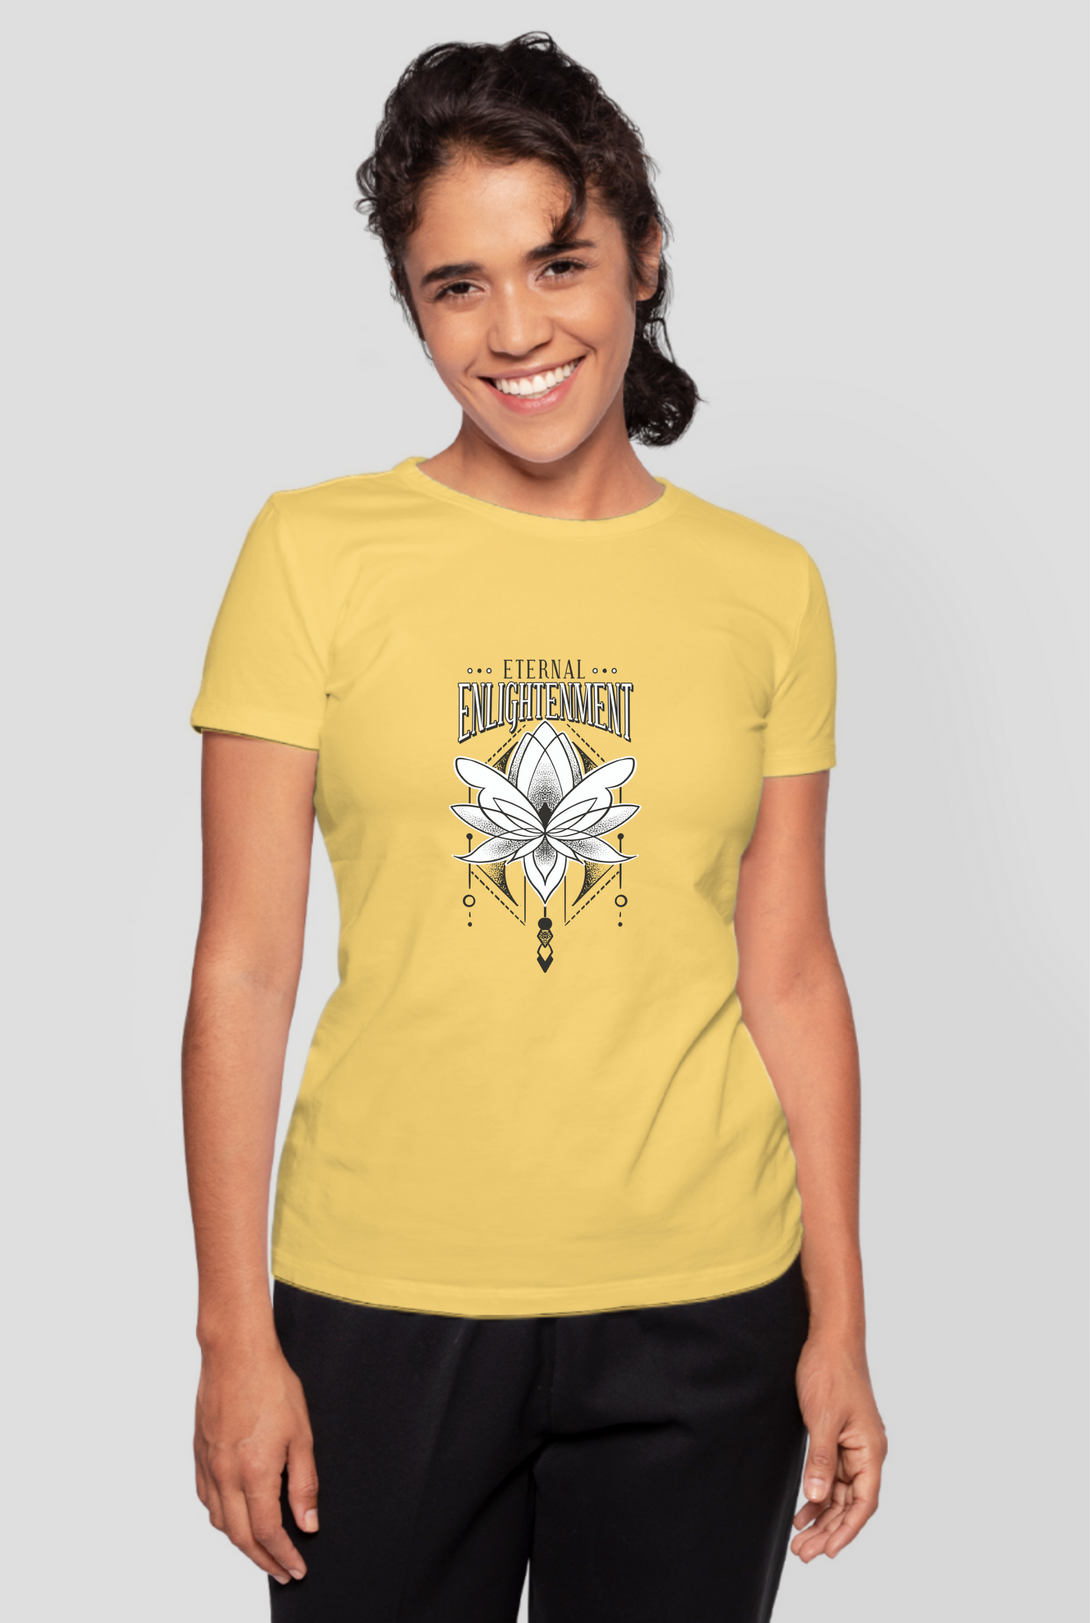 Eternal Enlightenment Lotus Printed T-Shirt For Women - WowWaves - 9